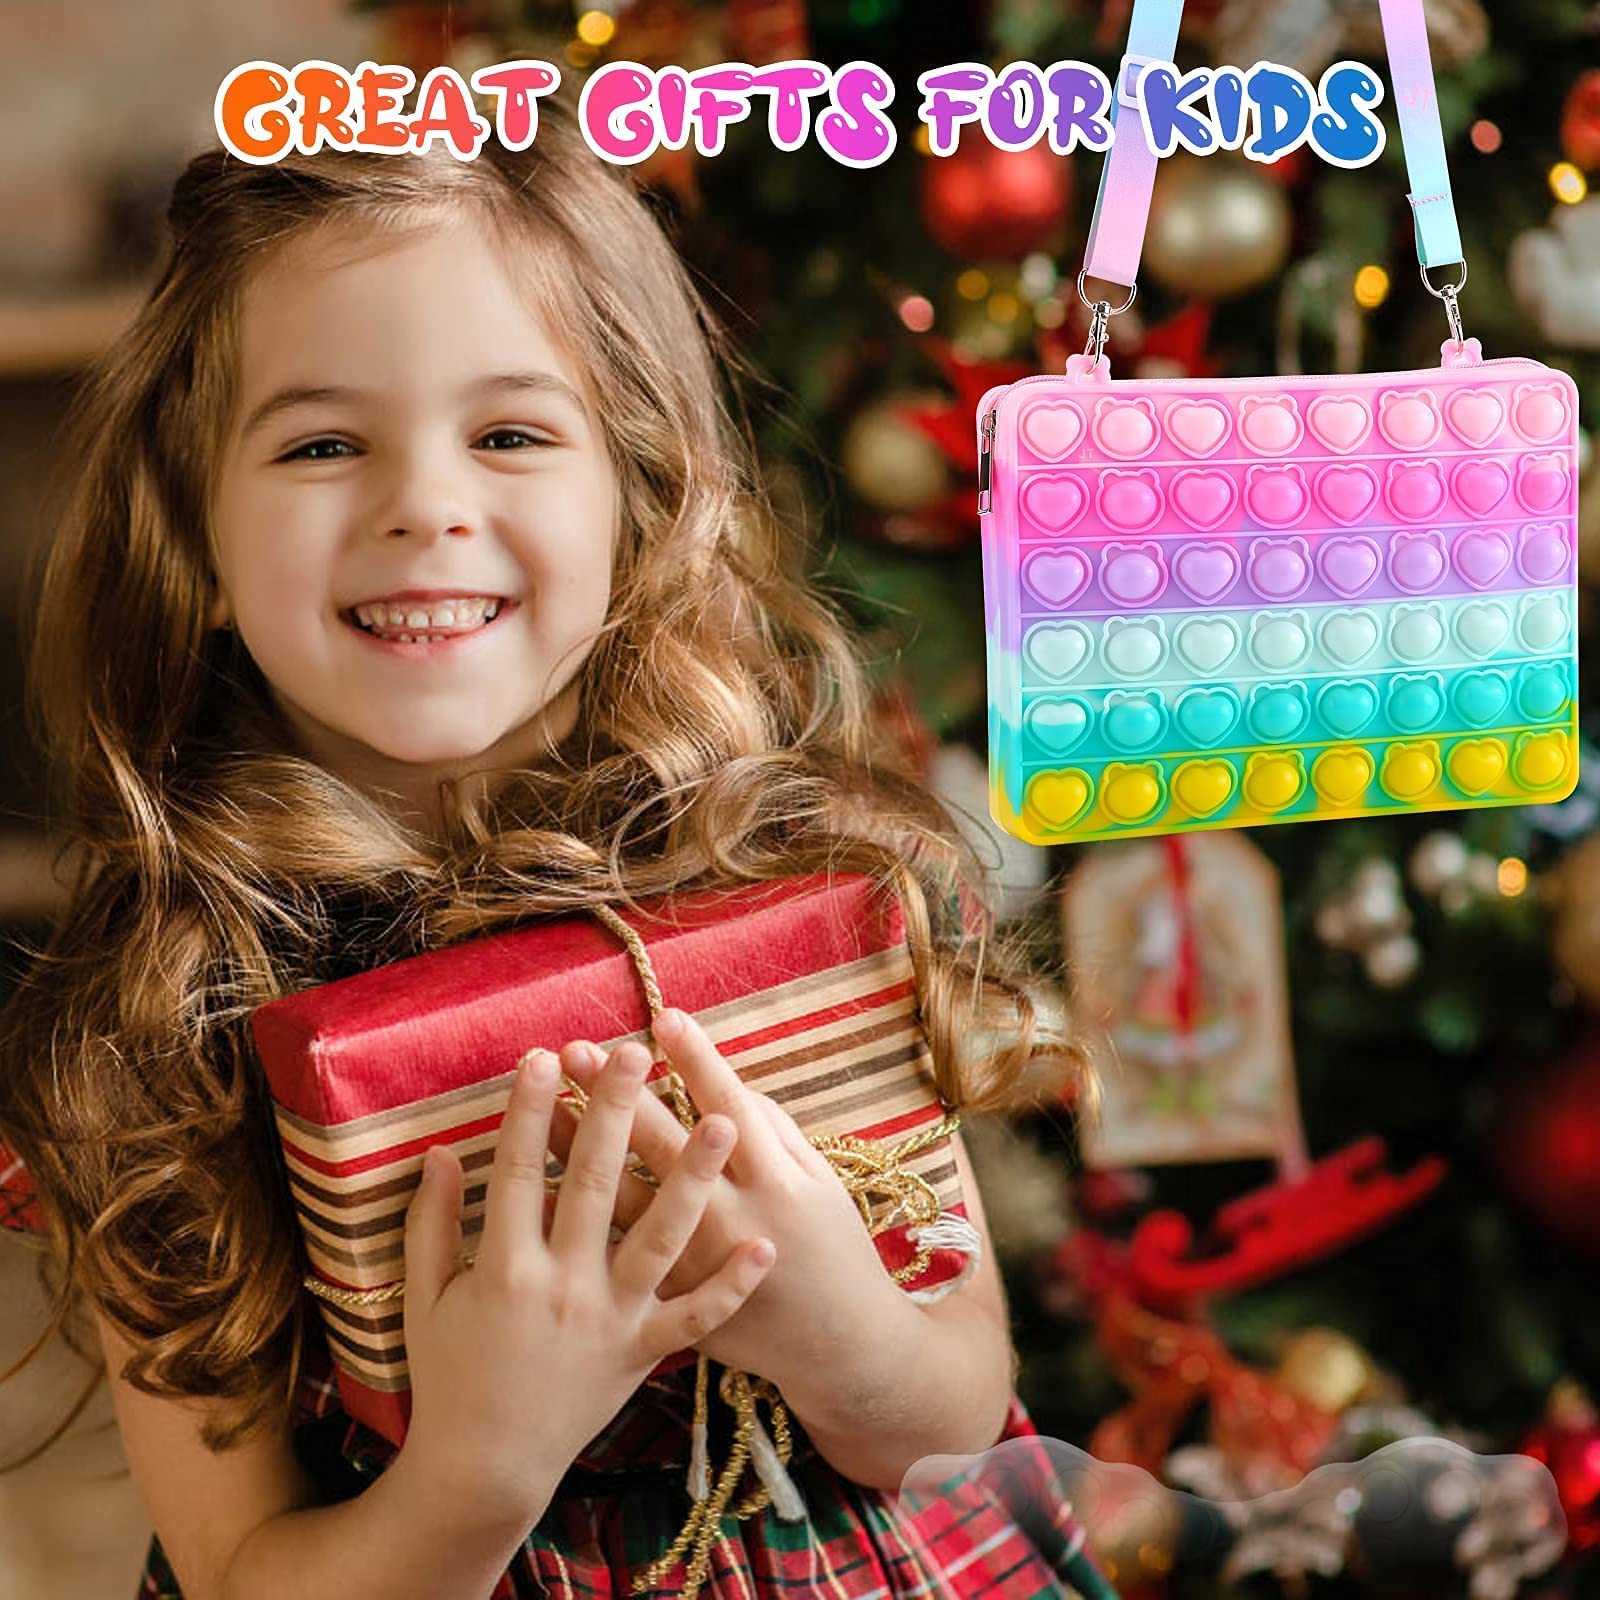 UOYHXQ Pop Purse Fidget Toy for Girls, Pop Shoulder Bag Fidget Purse for iPad Mini, Christmas Pop Fidget Toys Bag School Supplies, Stress Relief Sensory Crossbody Handbag Party Fidgets Gifts for Girls